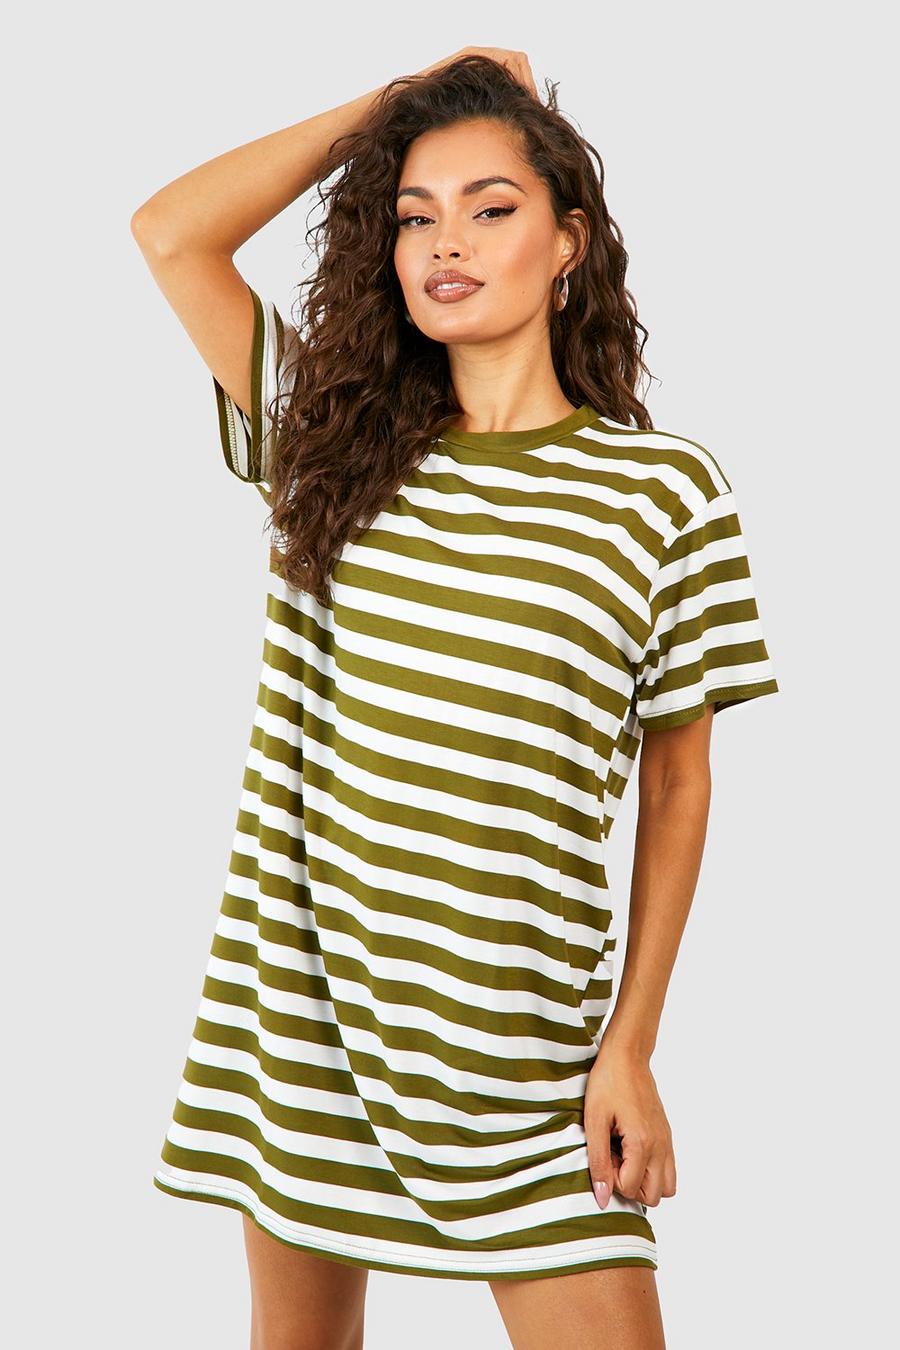 Olive gerde Oversized Striped T-shirt  Dress